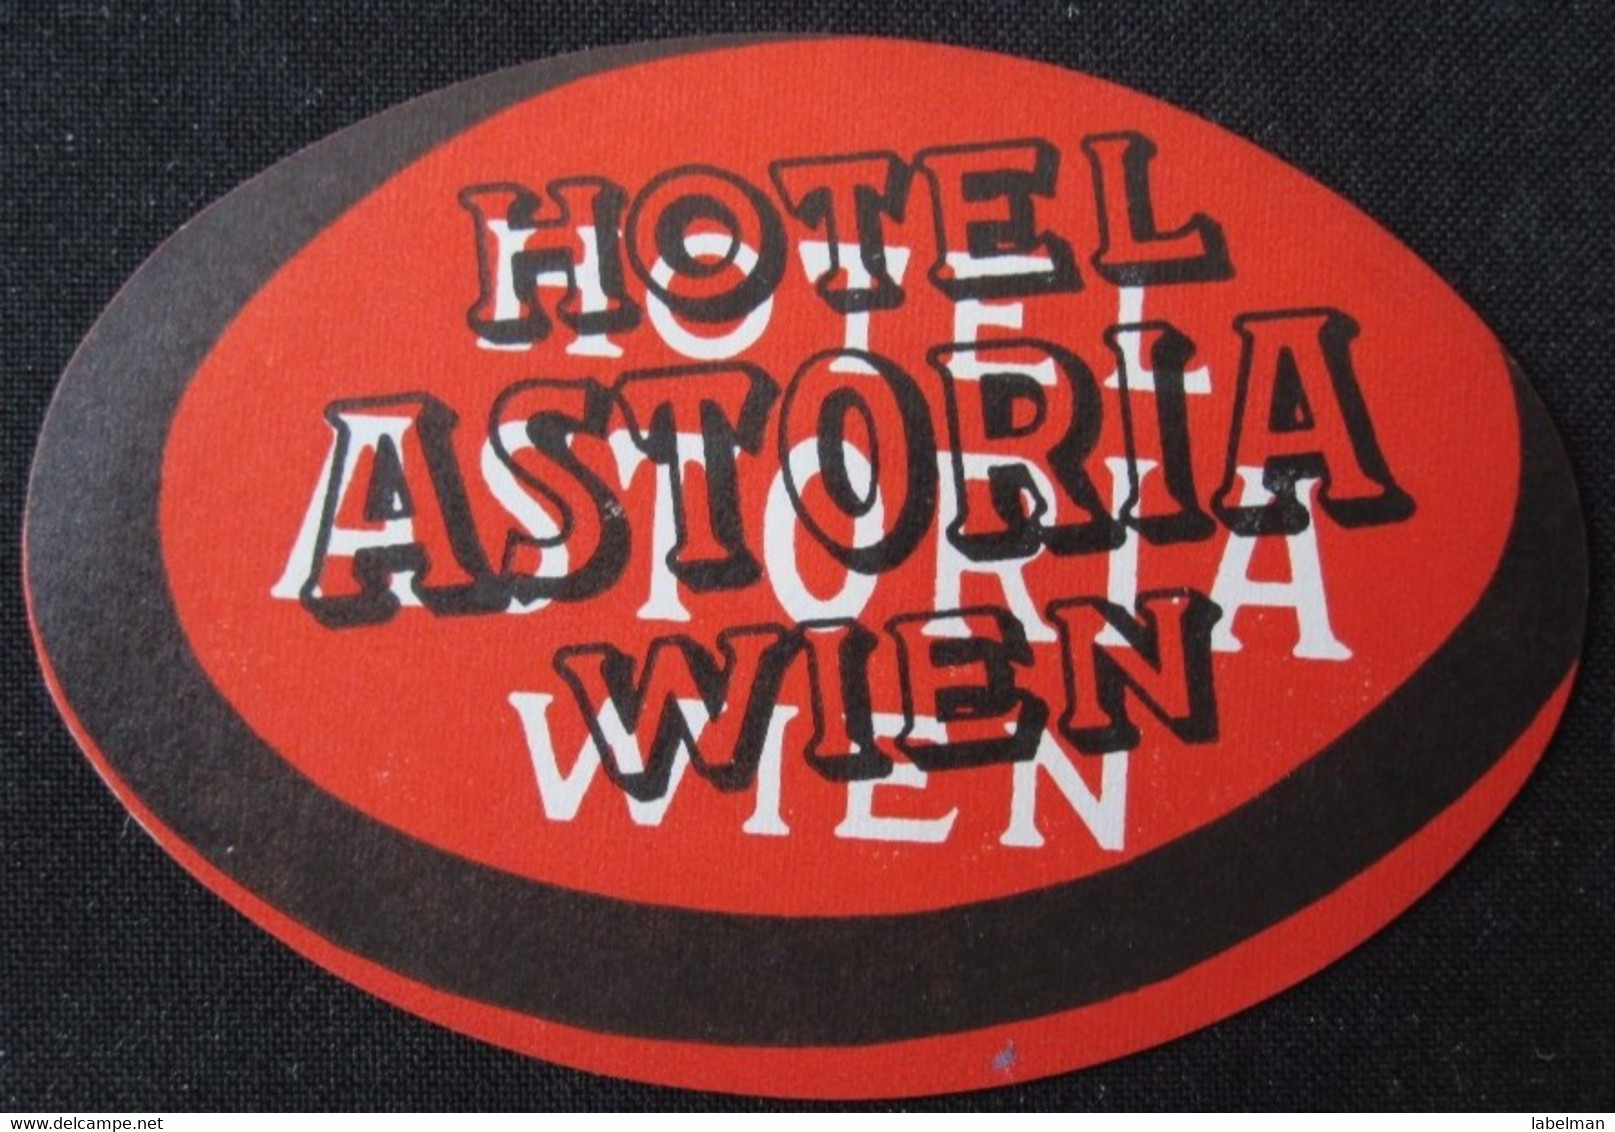 HOTEL MOTOR INN GASTHOF ERROR ASTORIA TIROL WIEN AUSTRIA STICKER DECAL LUGGAGE LABEL ETIQUETTE AUFKLEBER - Hotel Labels